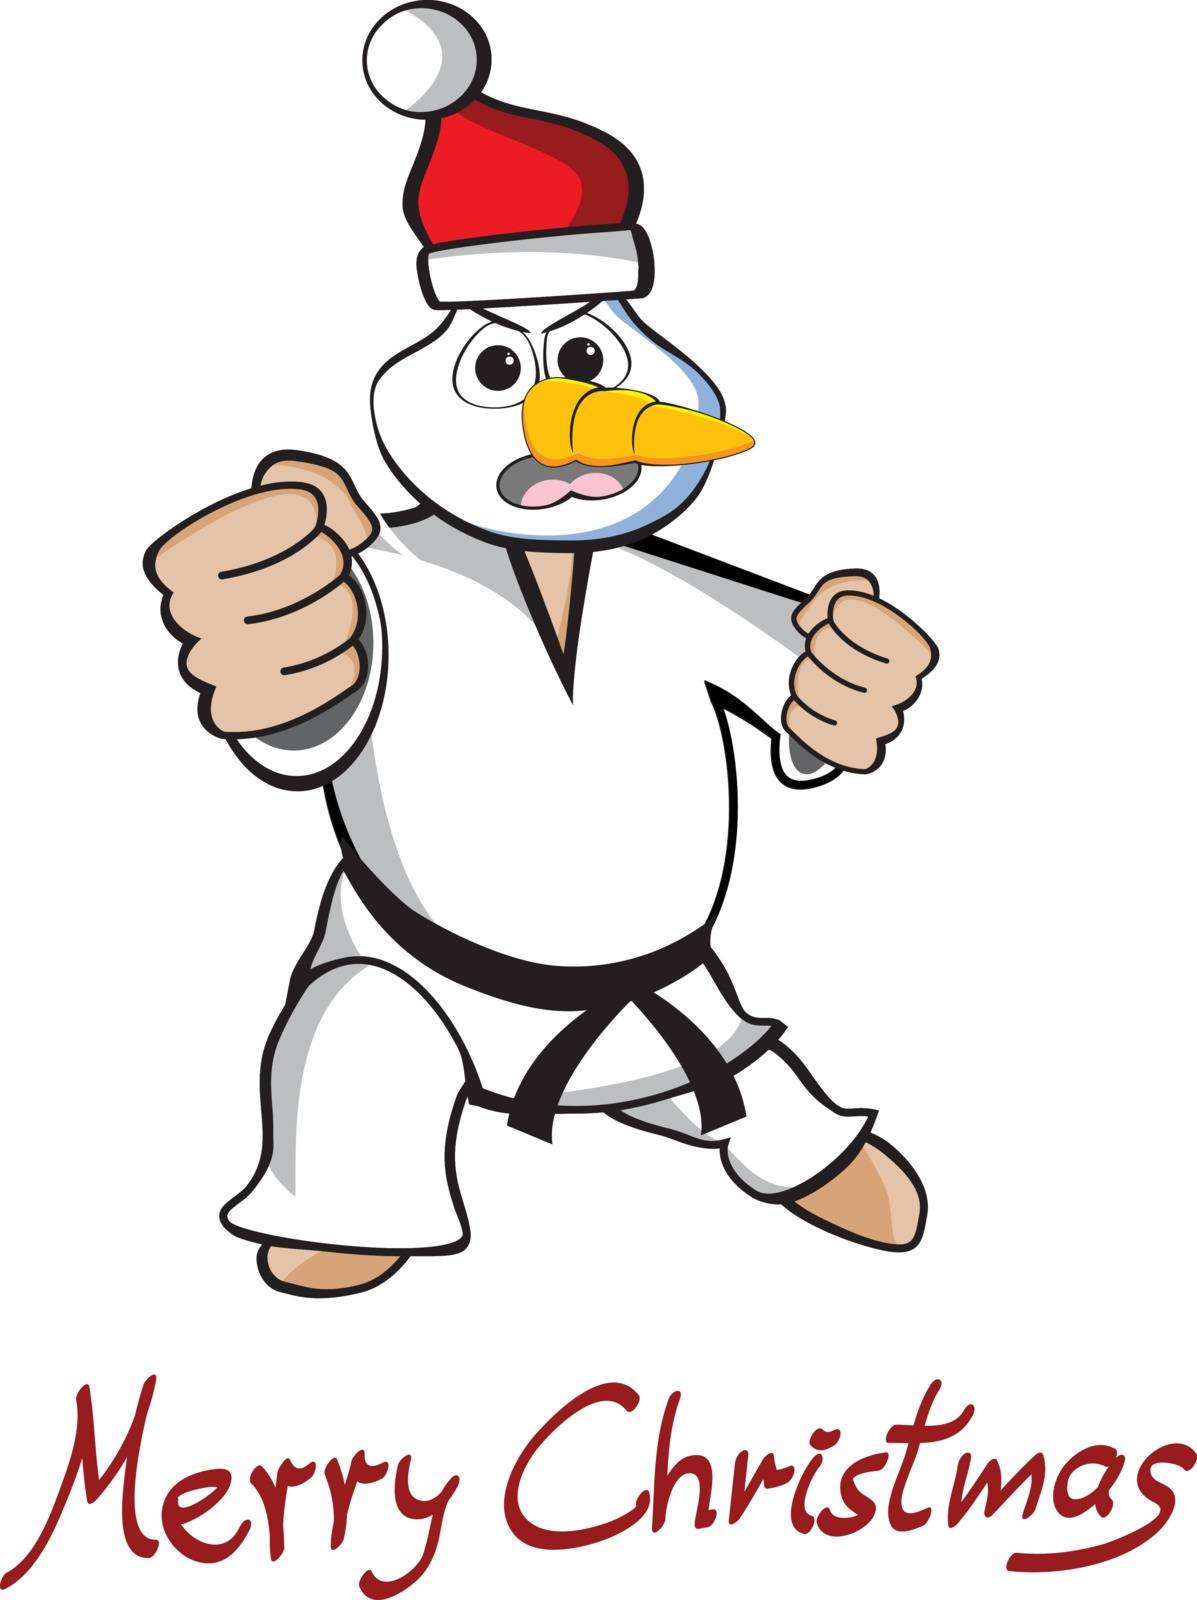 Taekwondo snowman Merry ChristmasMuscle snowman Merry Christmas by w20er